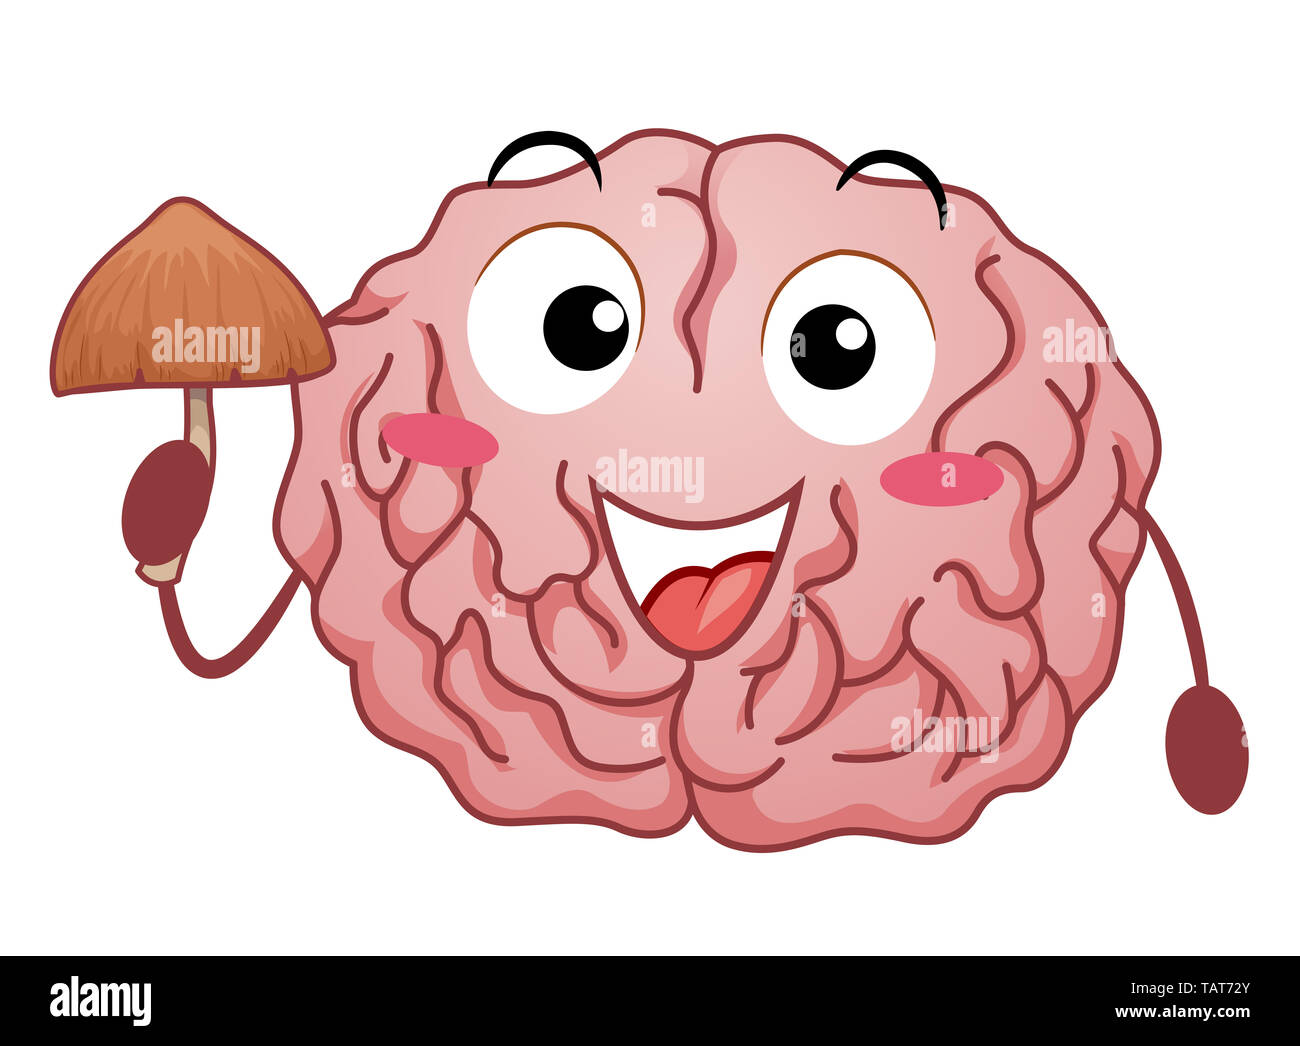 Illustration of a Brain Mascot Holding Magic Mushroom and Smiling Stock Photo